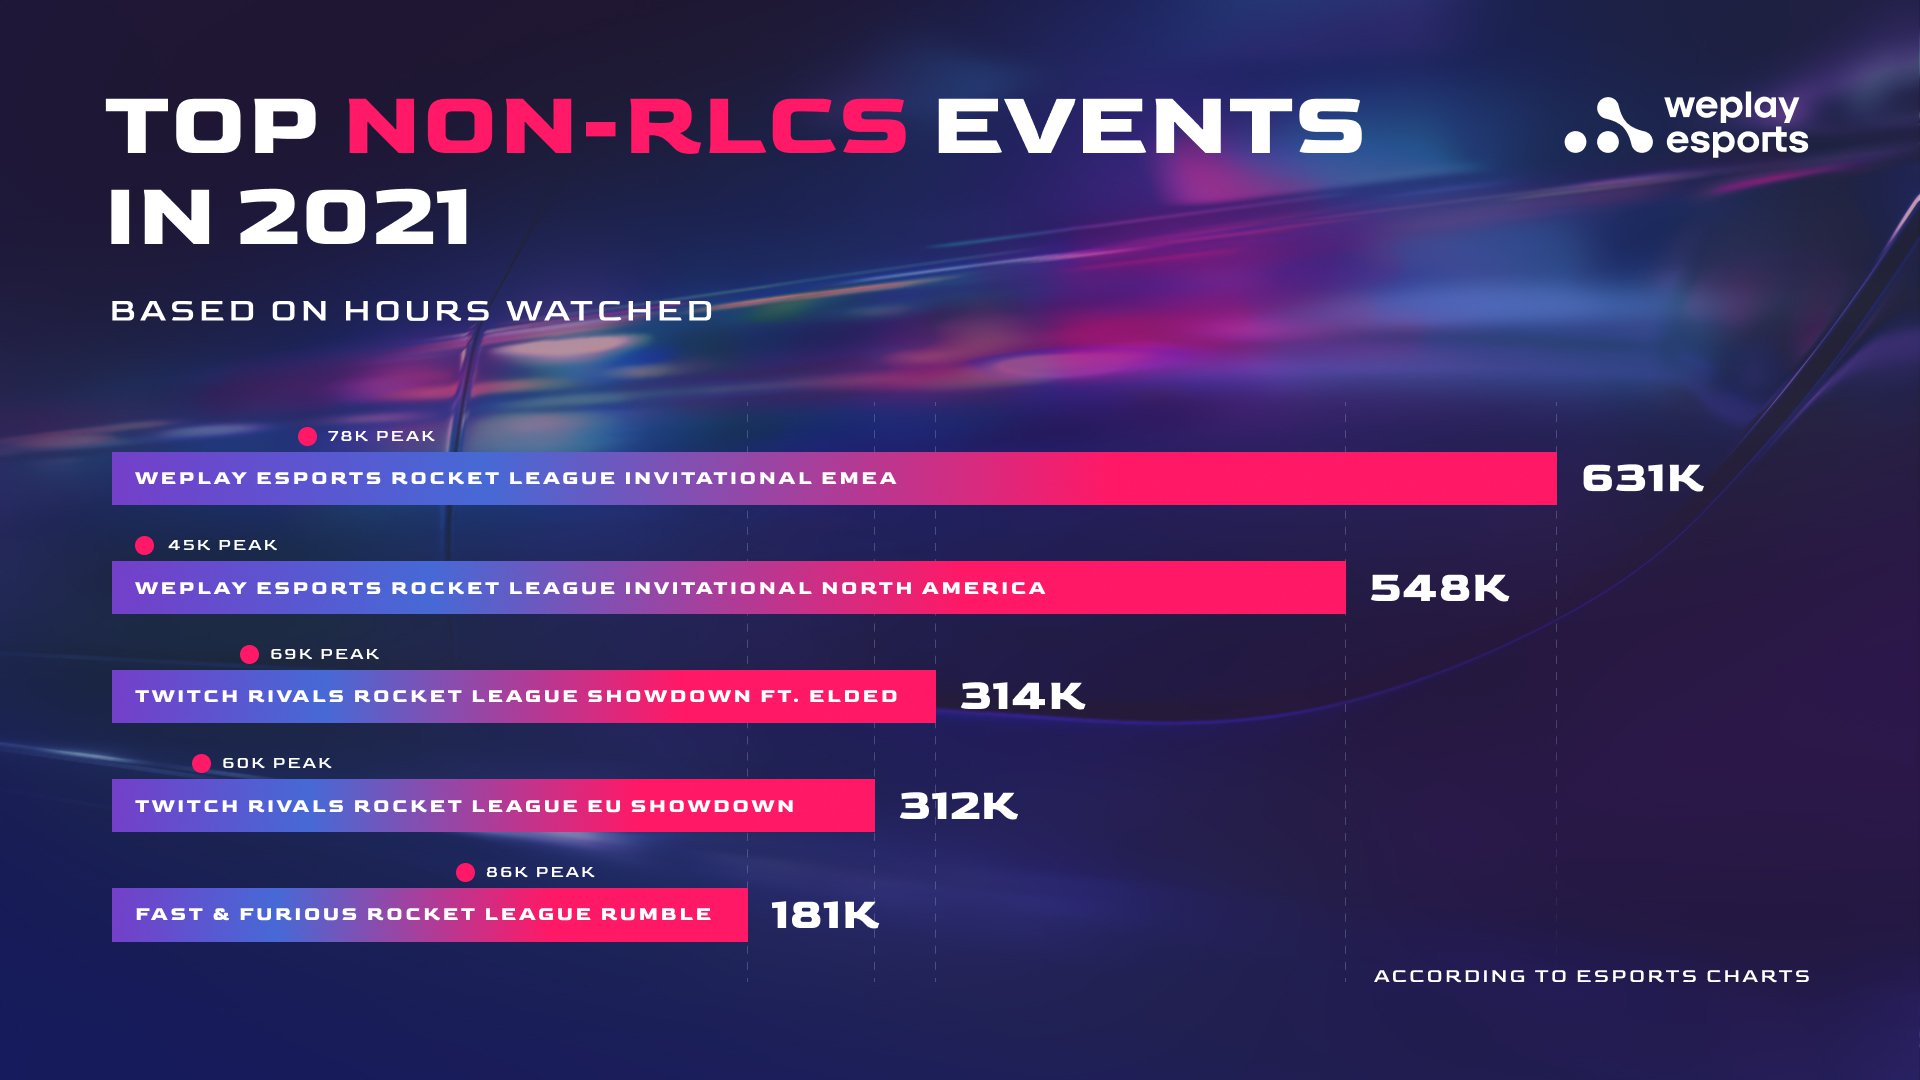 Топ-5 подій по Rocket League за межами RLCS за годинами перегляду, за даними Esports Charts. Джерело: WePlay Holding